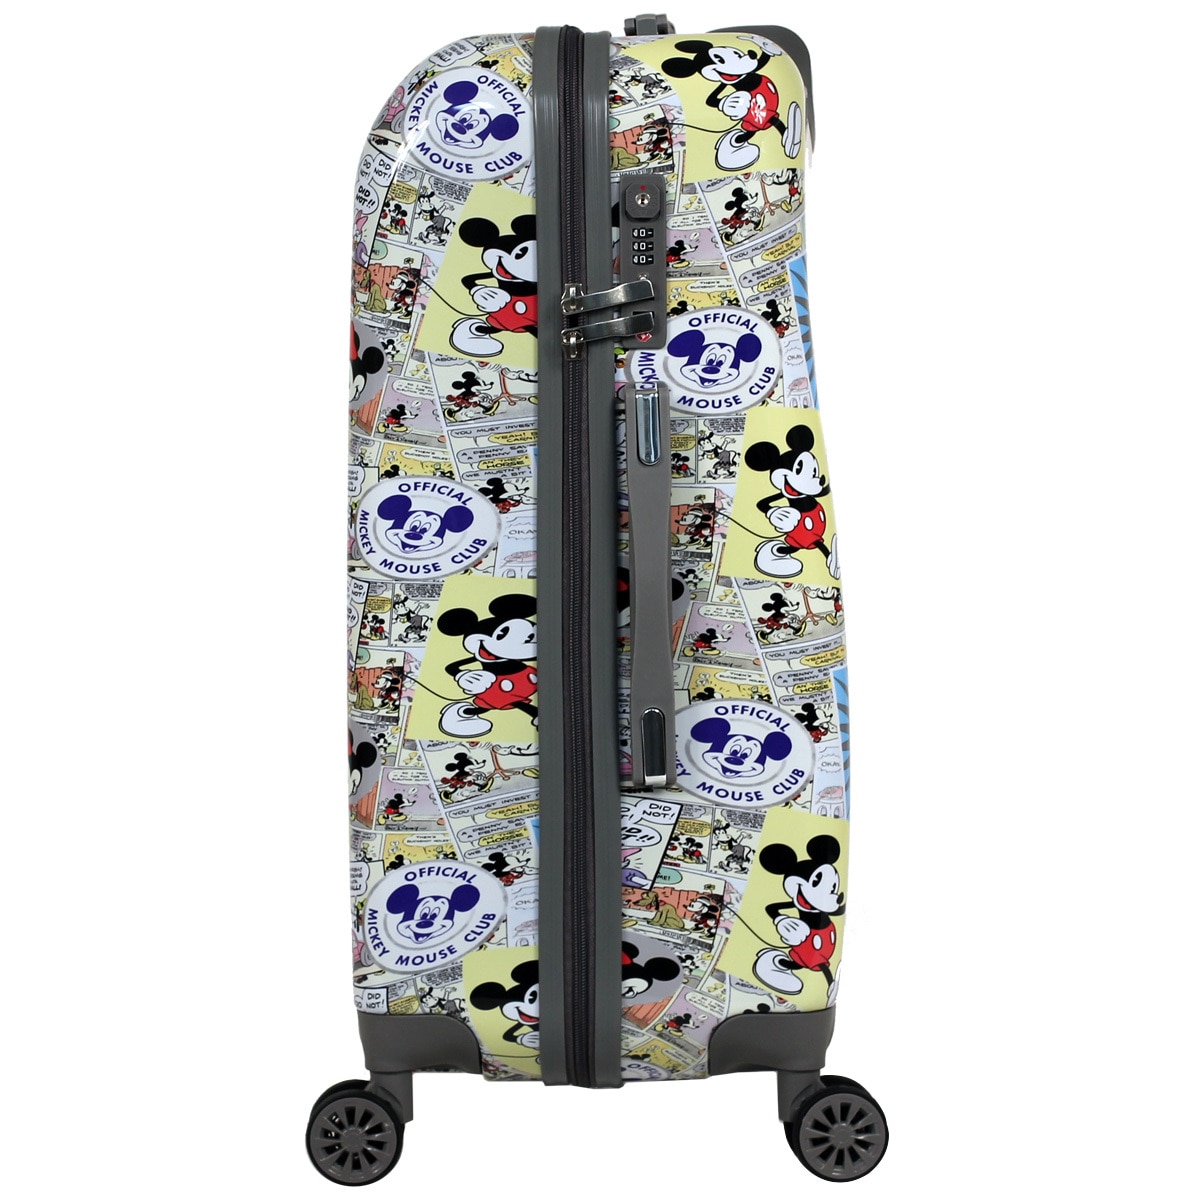 Tosca Mickey Medium Luggage